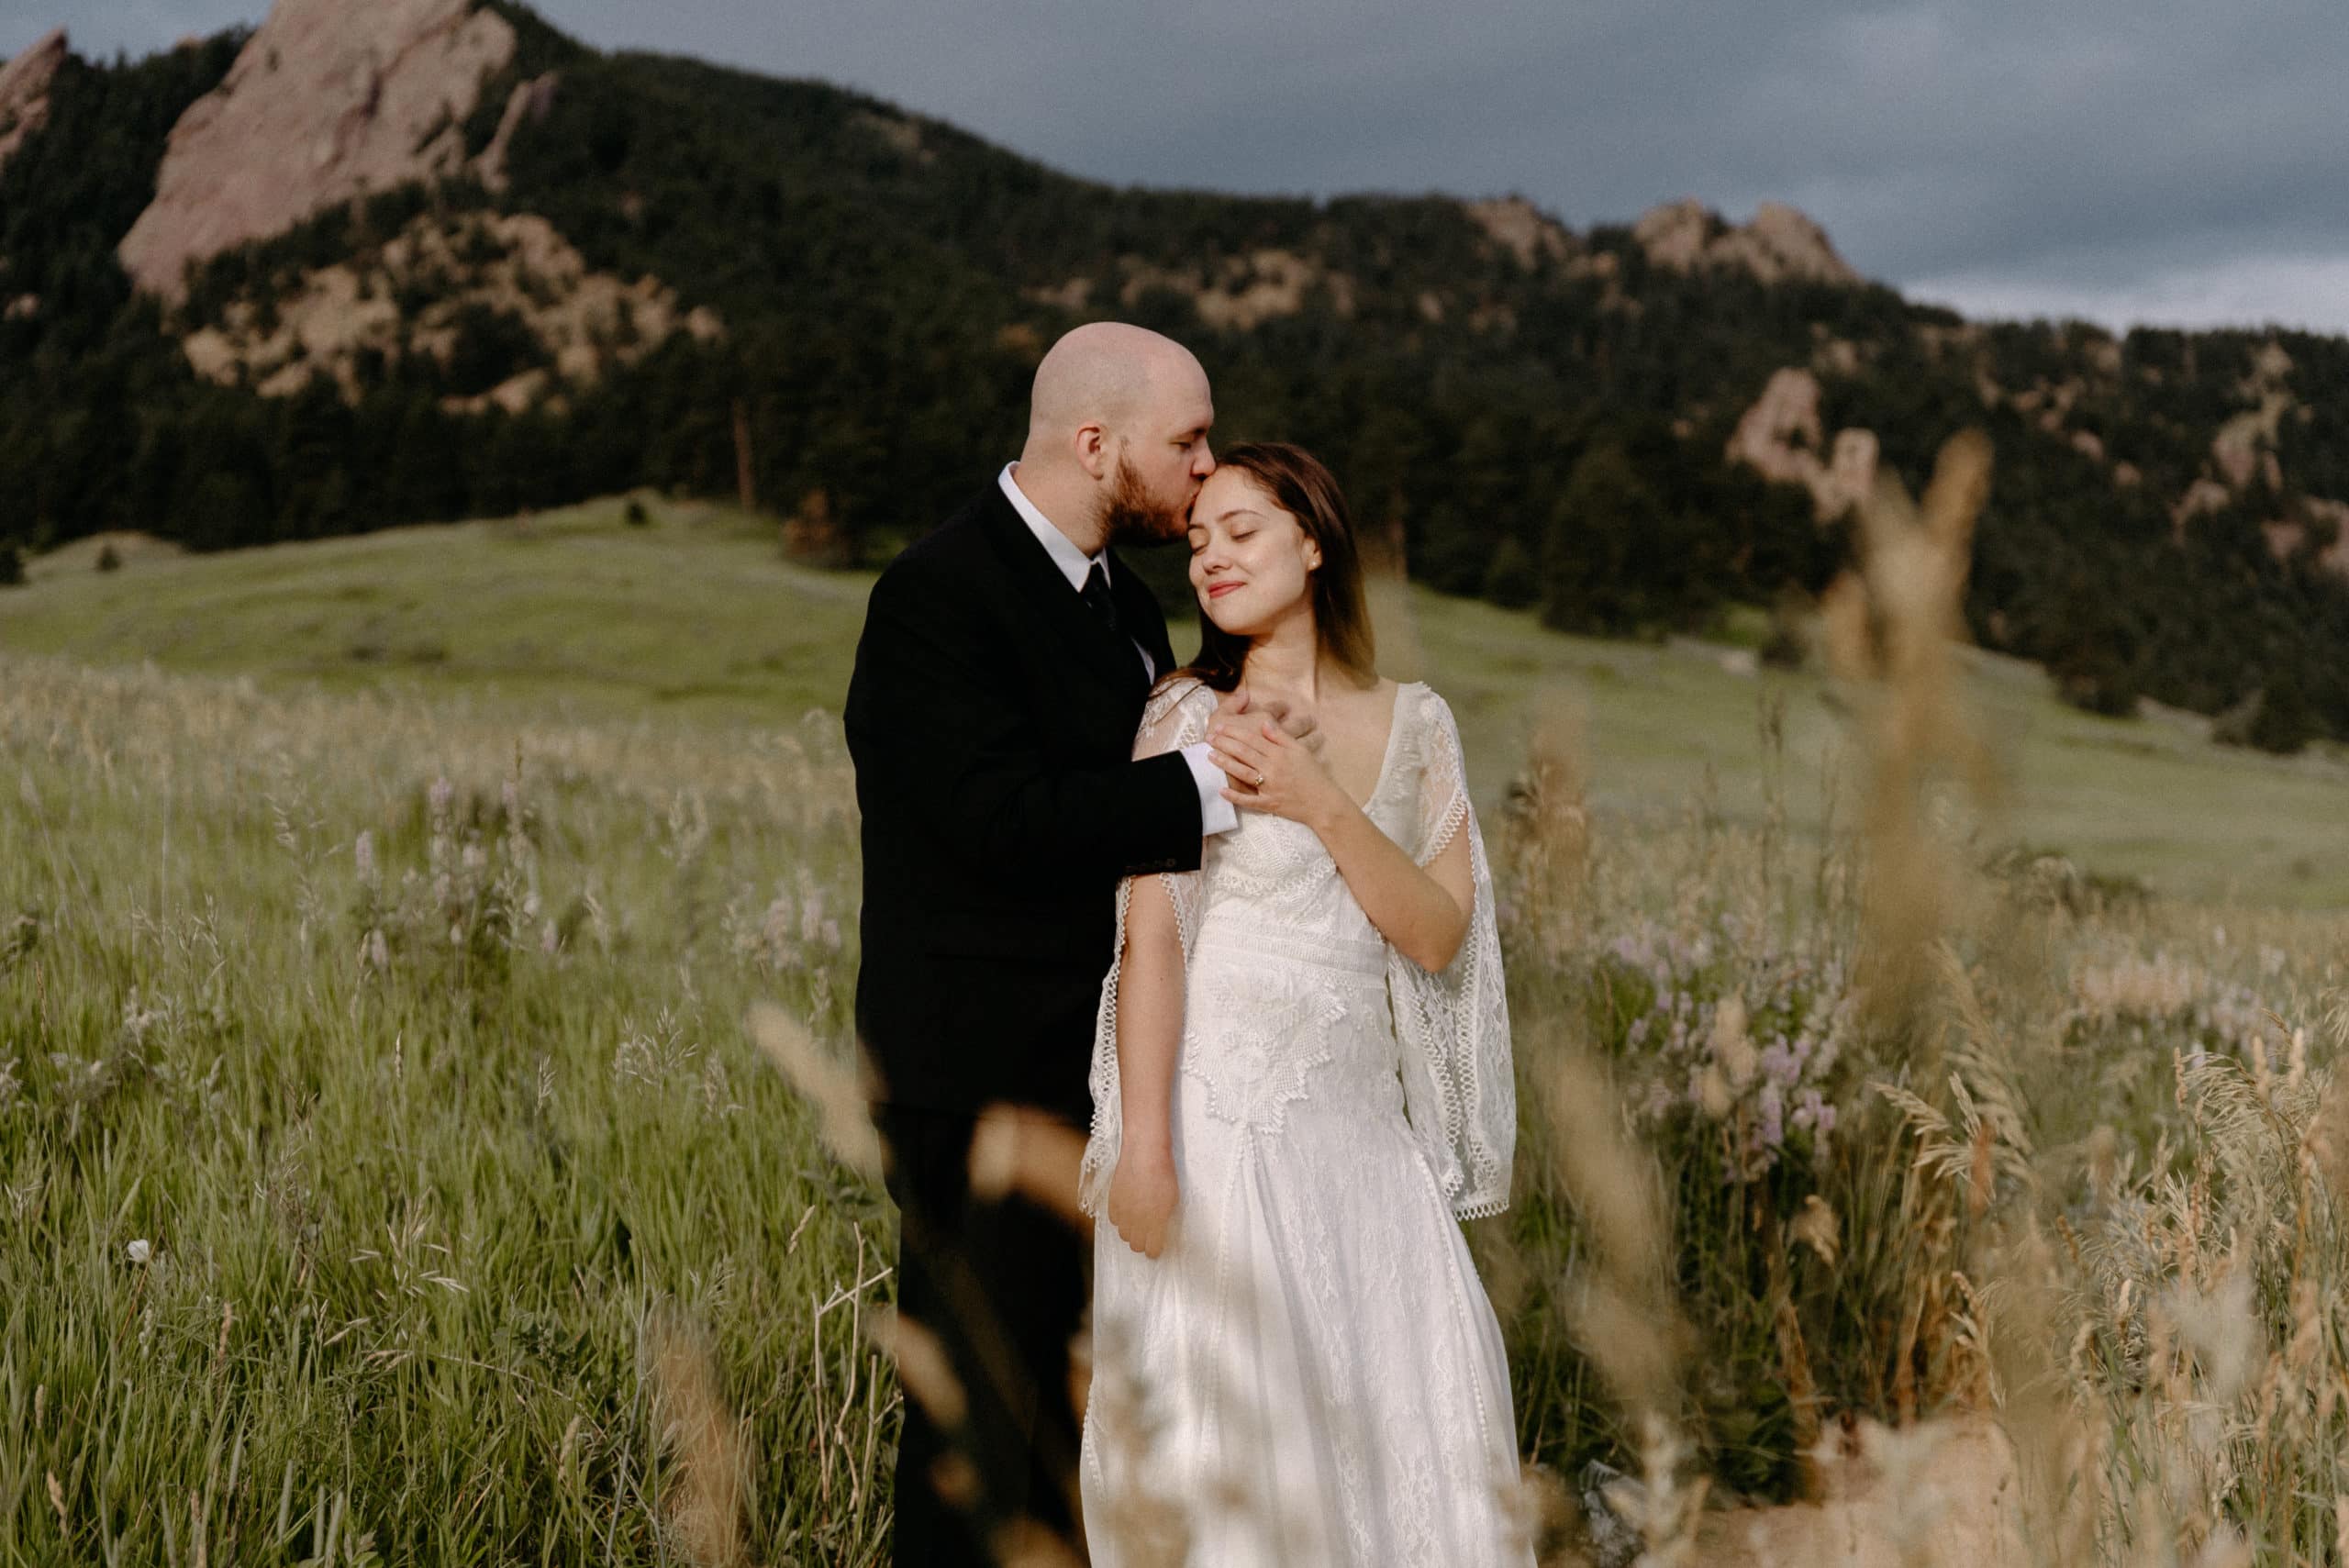 Groom holds his bride at Chautauqua Park elopement Location in Boulder